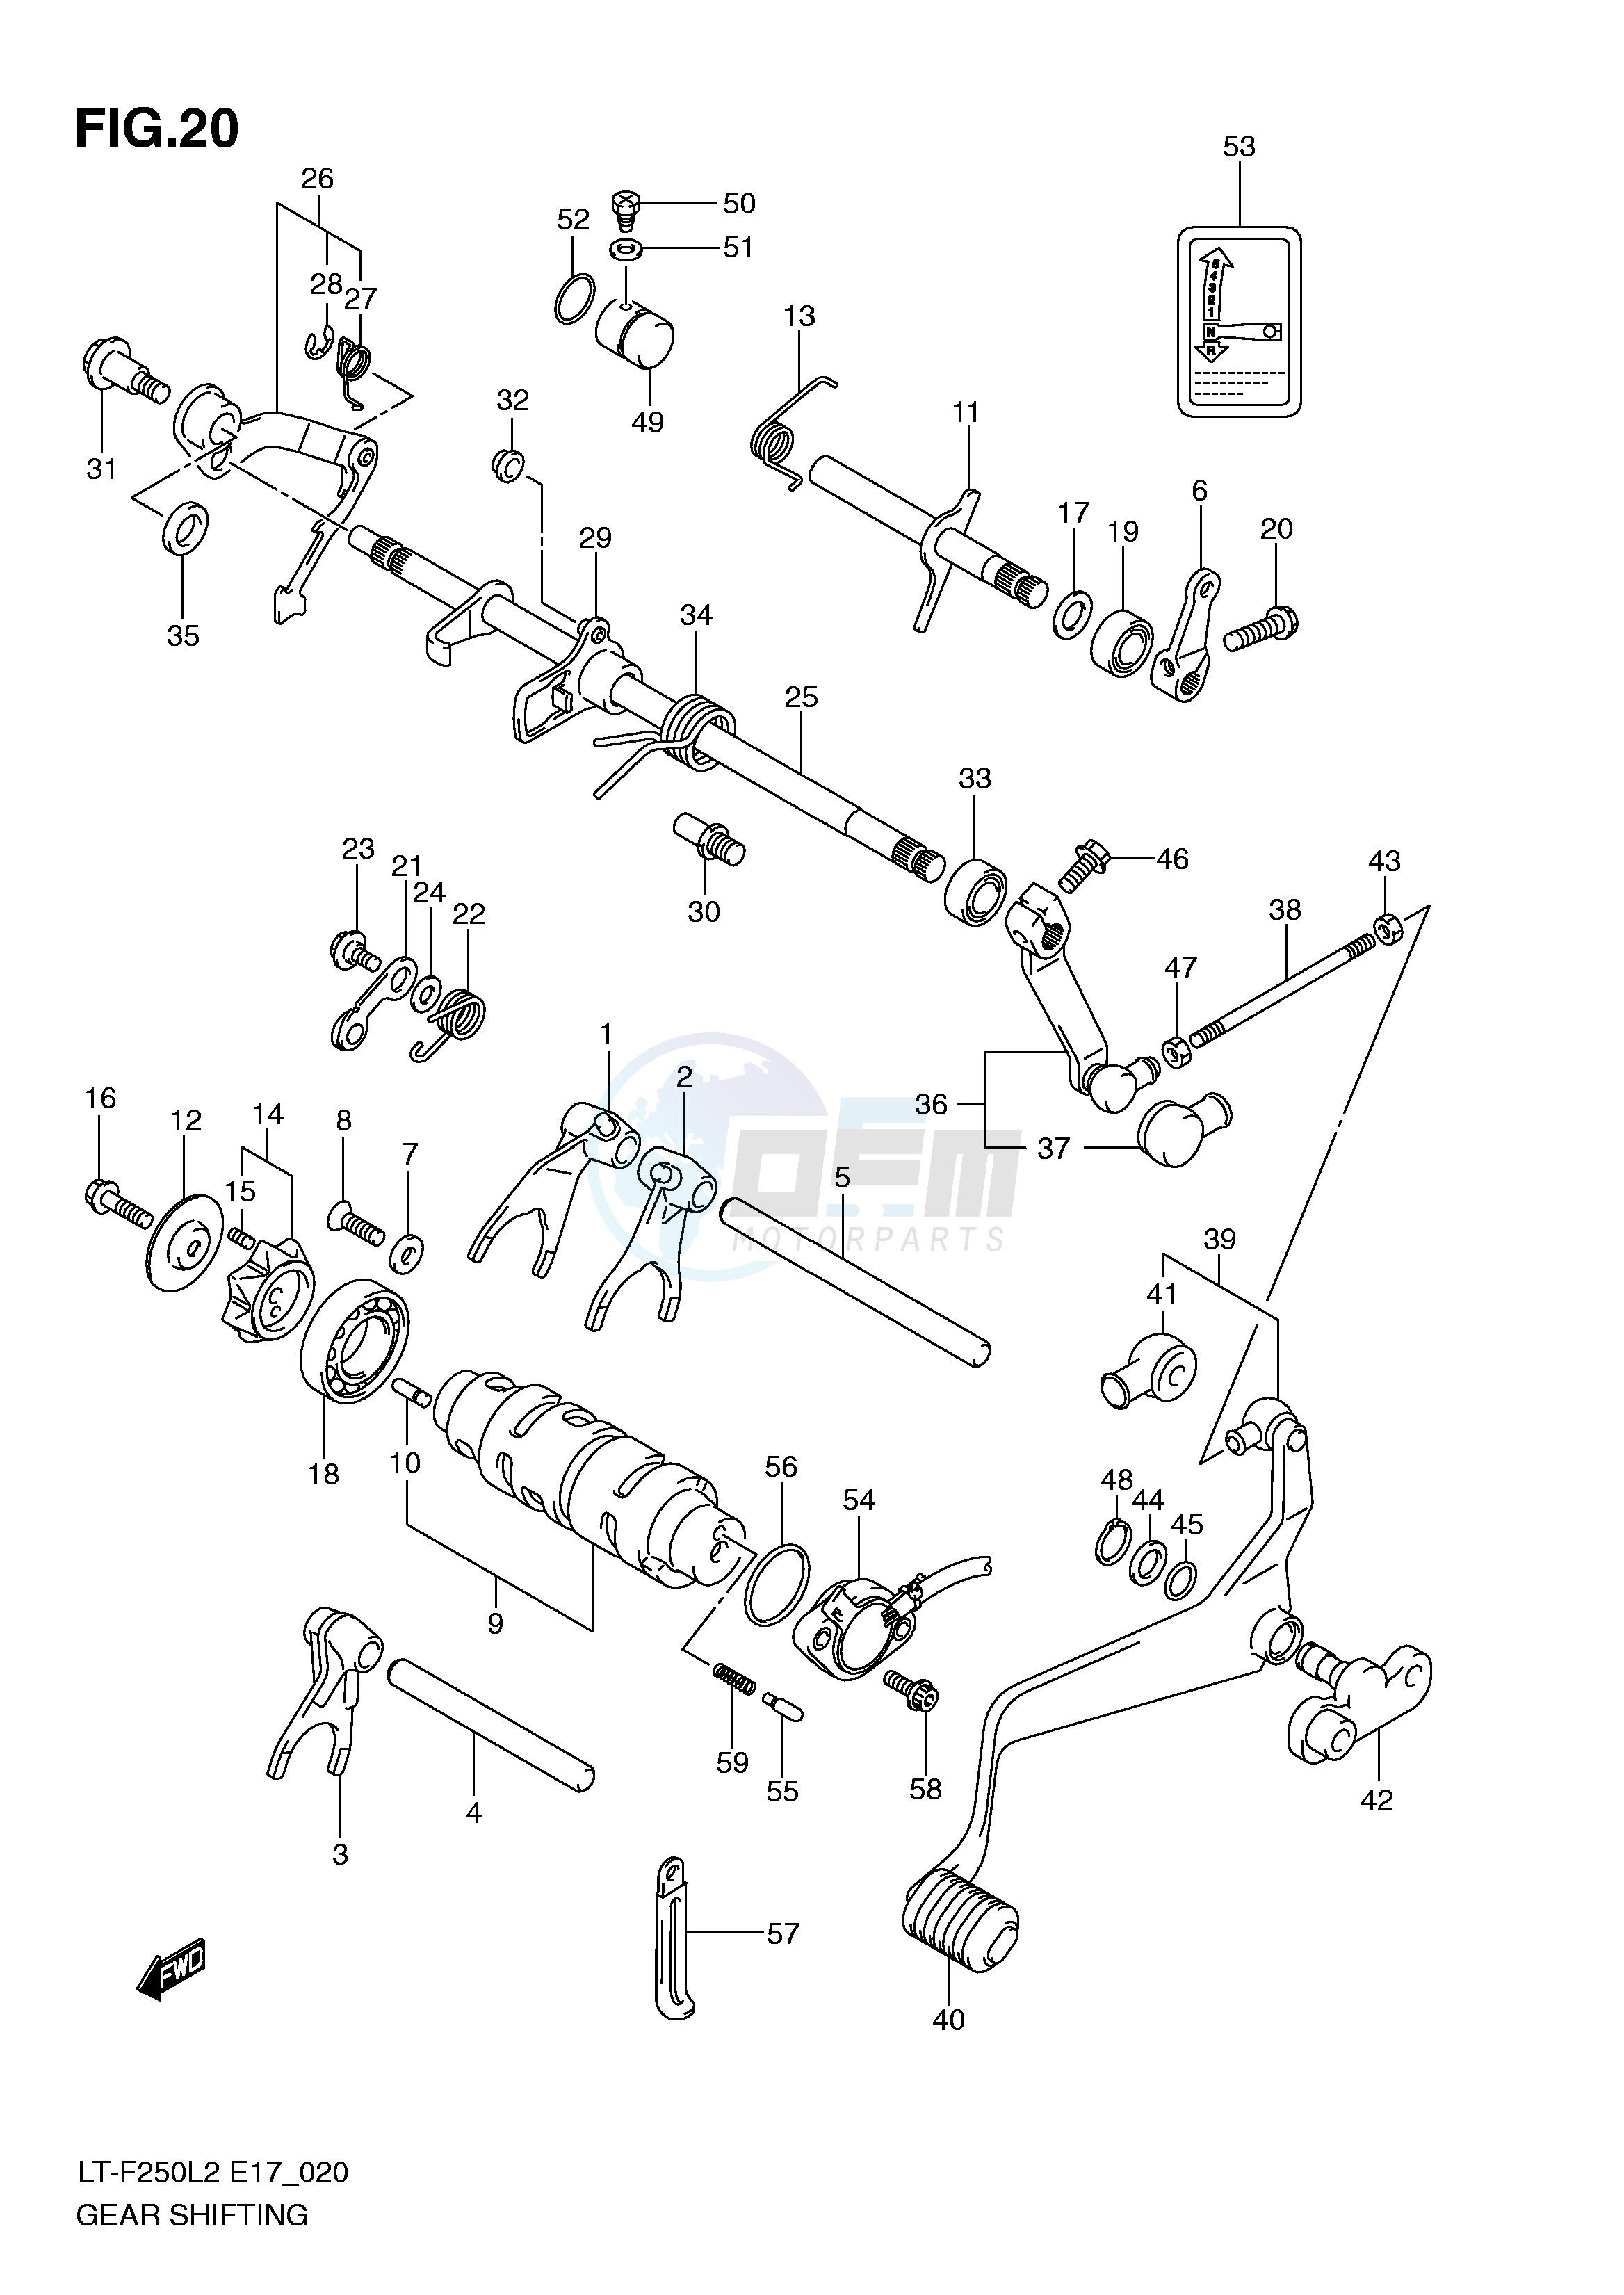 GEAR SHIFTING (LT-F250L2 E17) blueprint